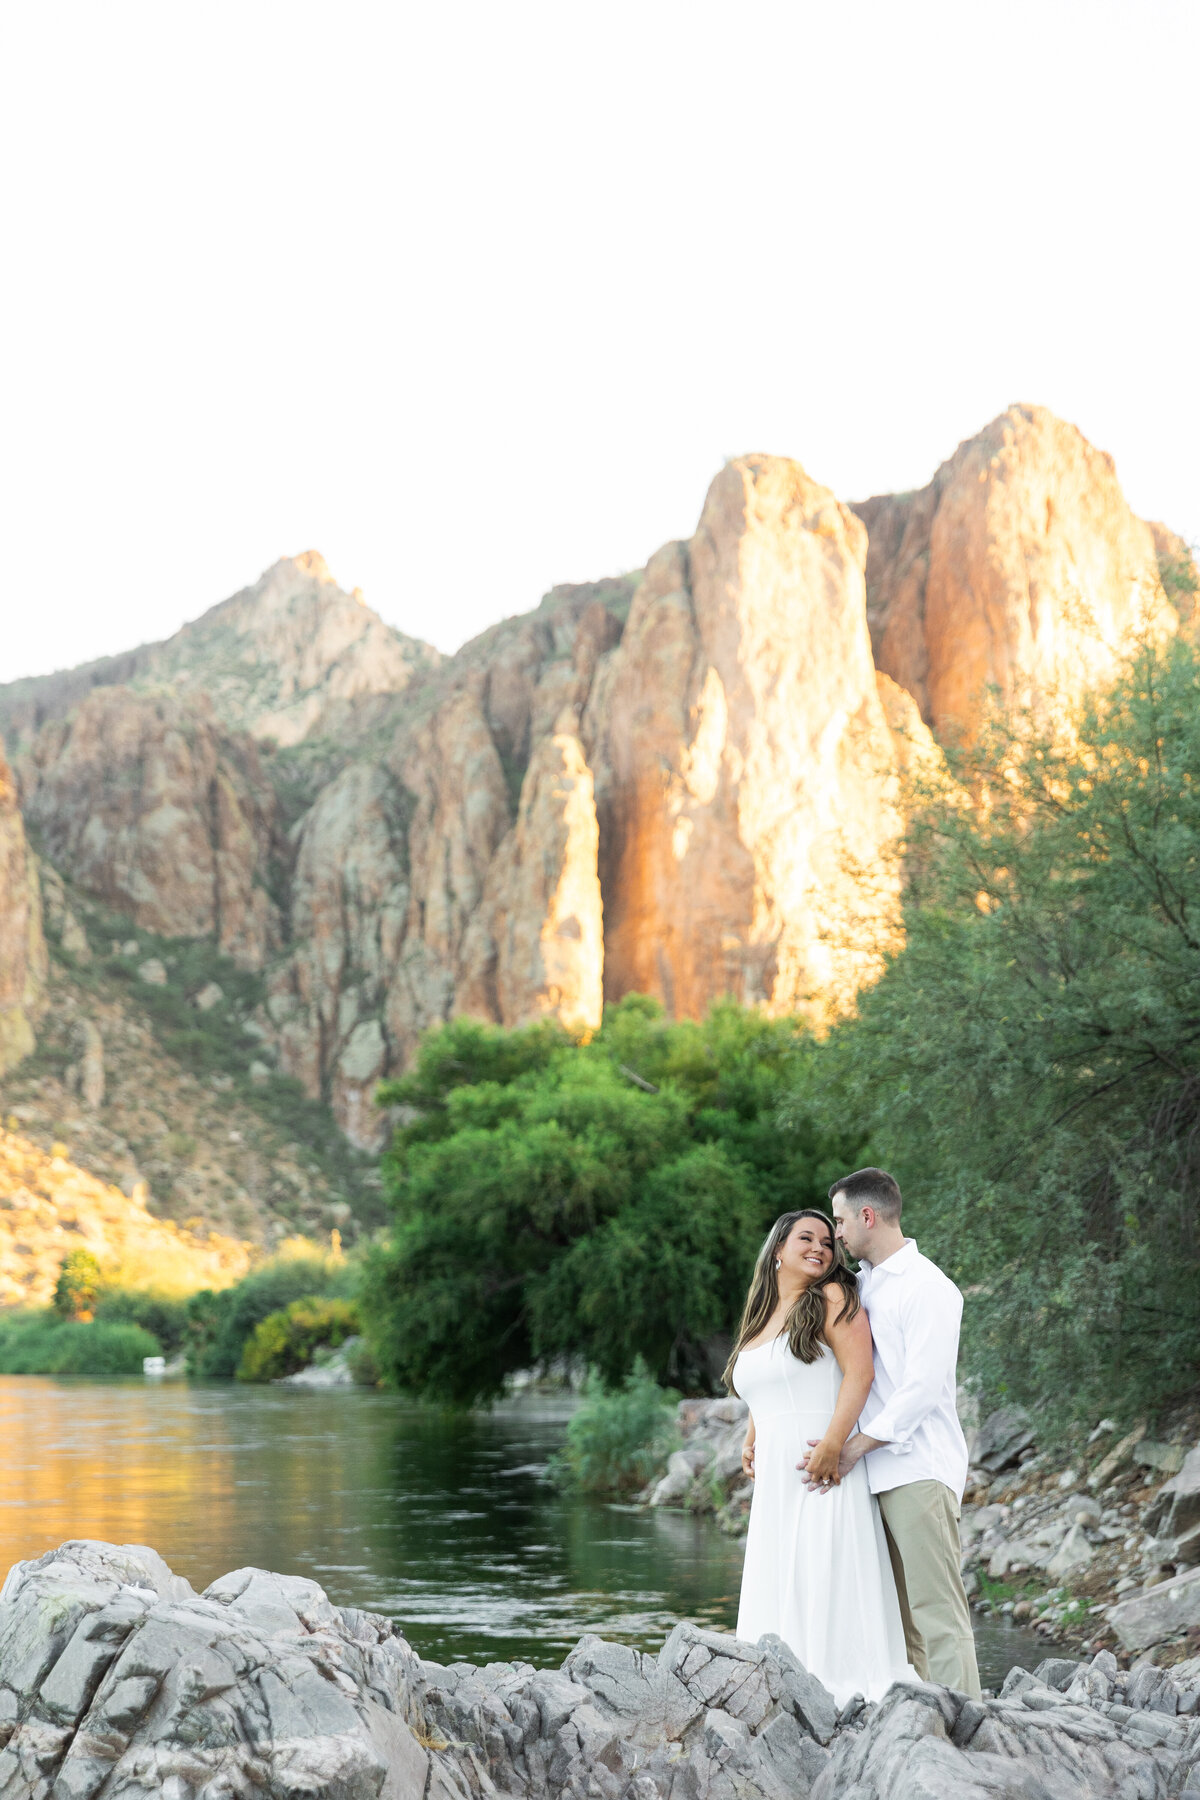 Karlie Colleen Photography - Kaitlyn & Cristian Engagement Session - Salt River Arizona-258